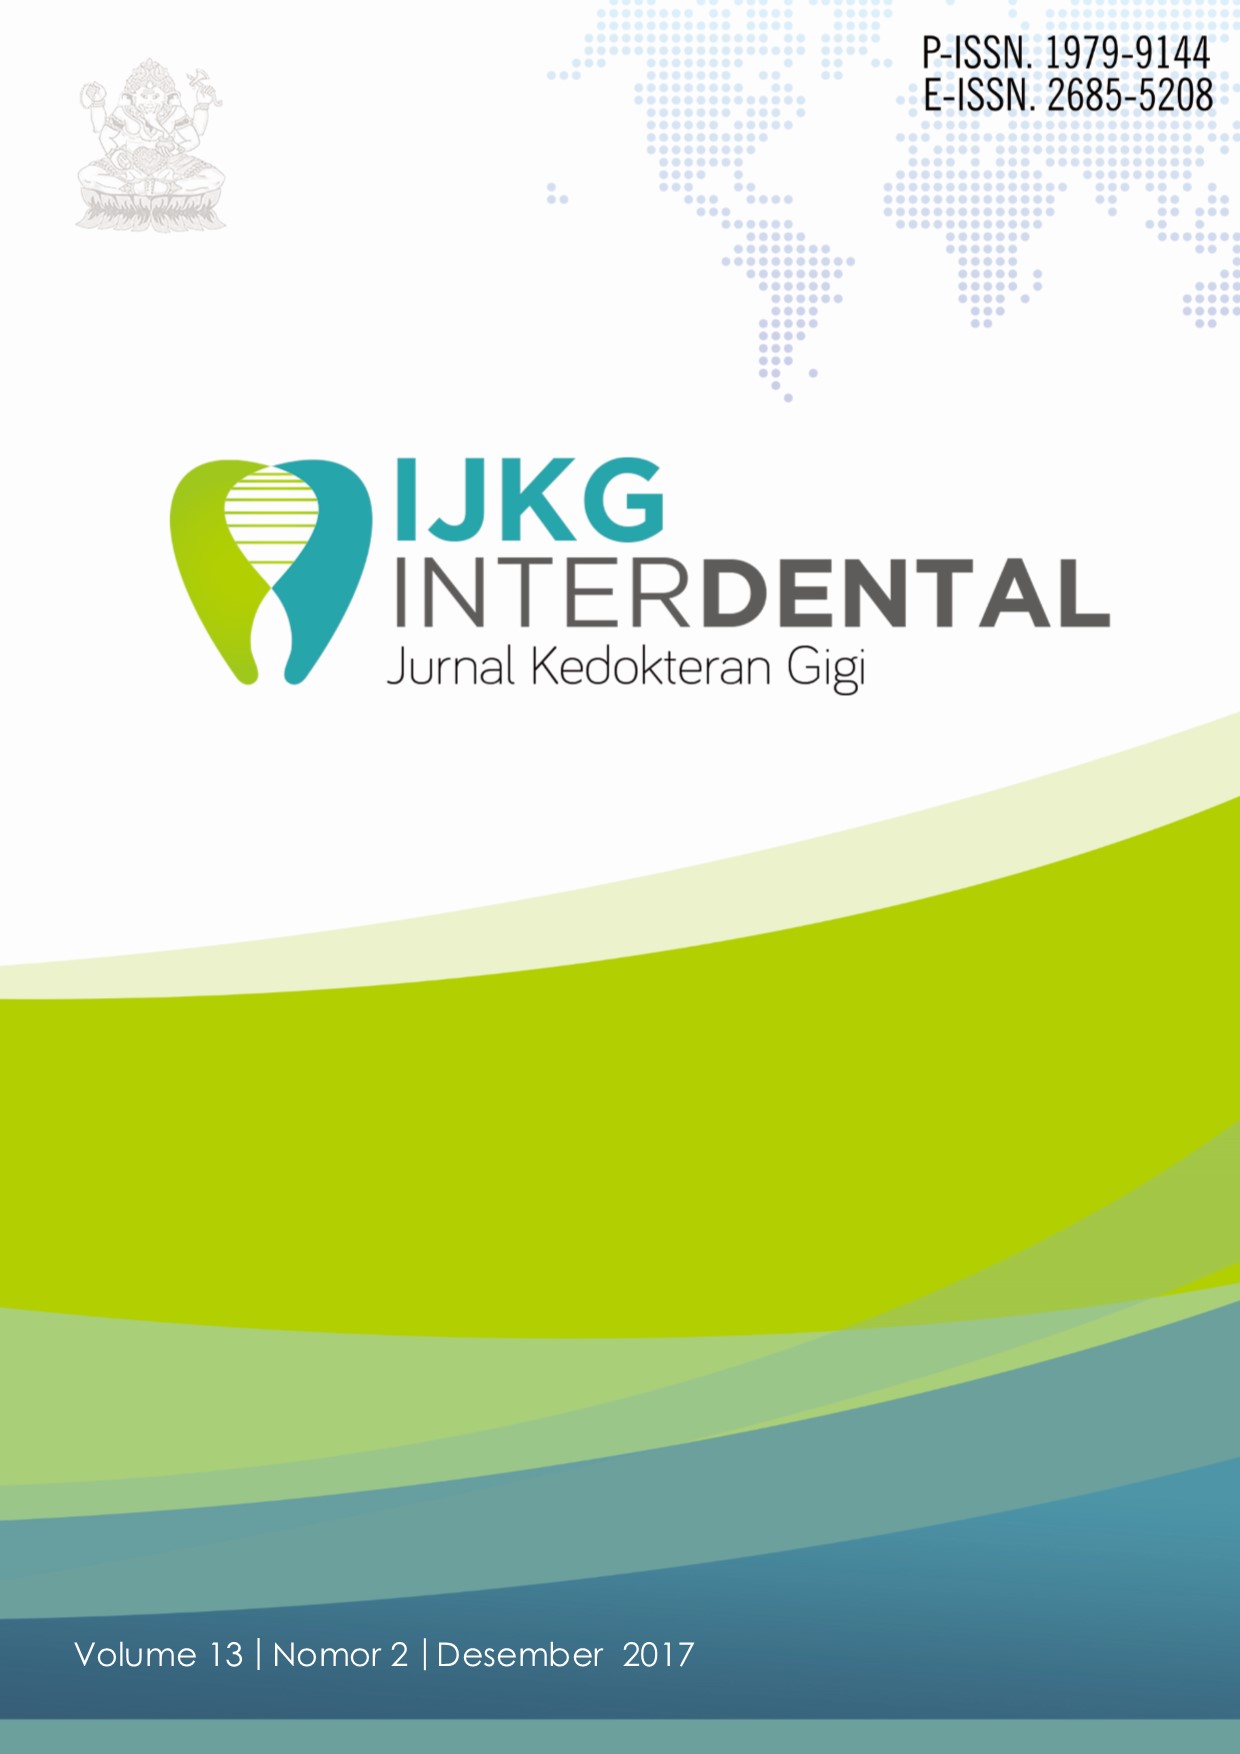 					View Vol. 13 No. 2 (2017): Interdental Jurnal Kedokteran Gigi (IJKG)
				